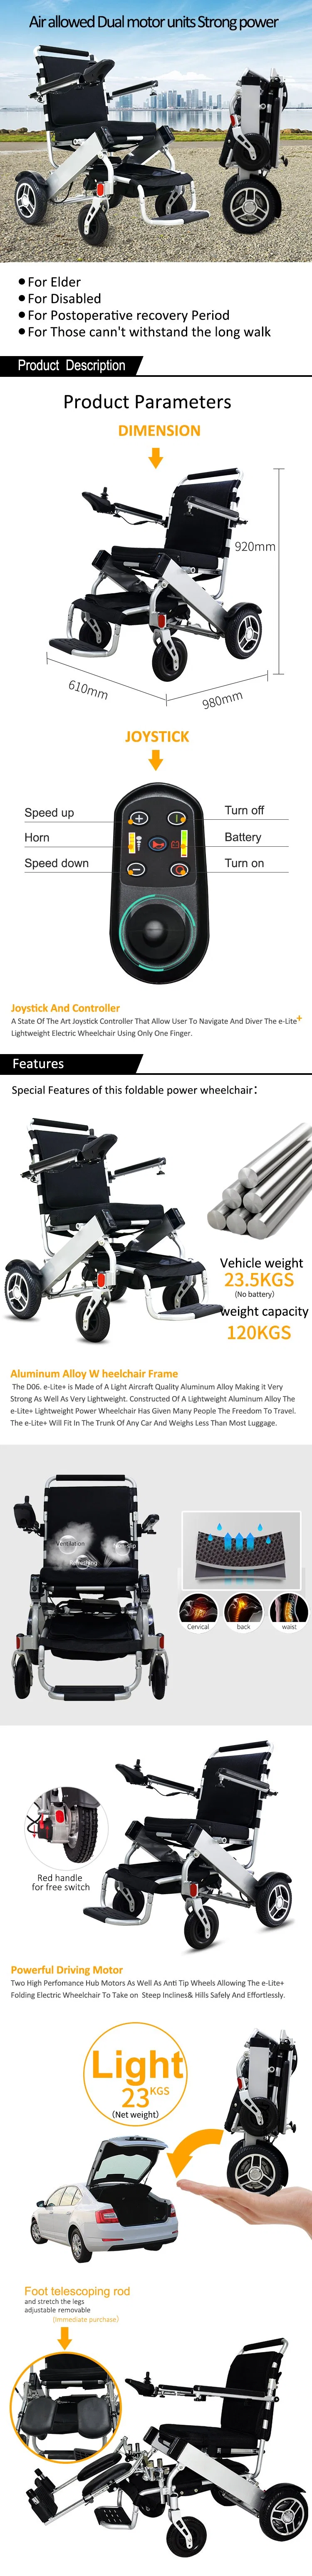 Hot Sale Best Quality Lightweight Folding Electric Wheelchair